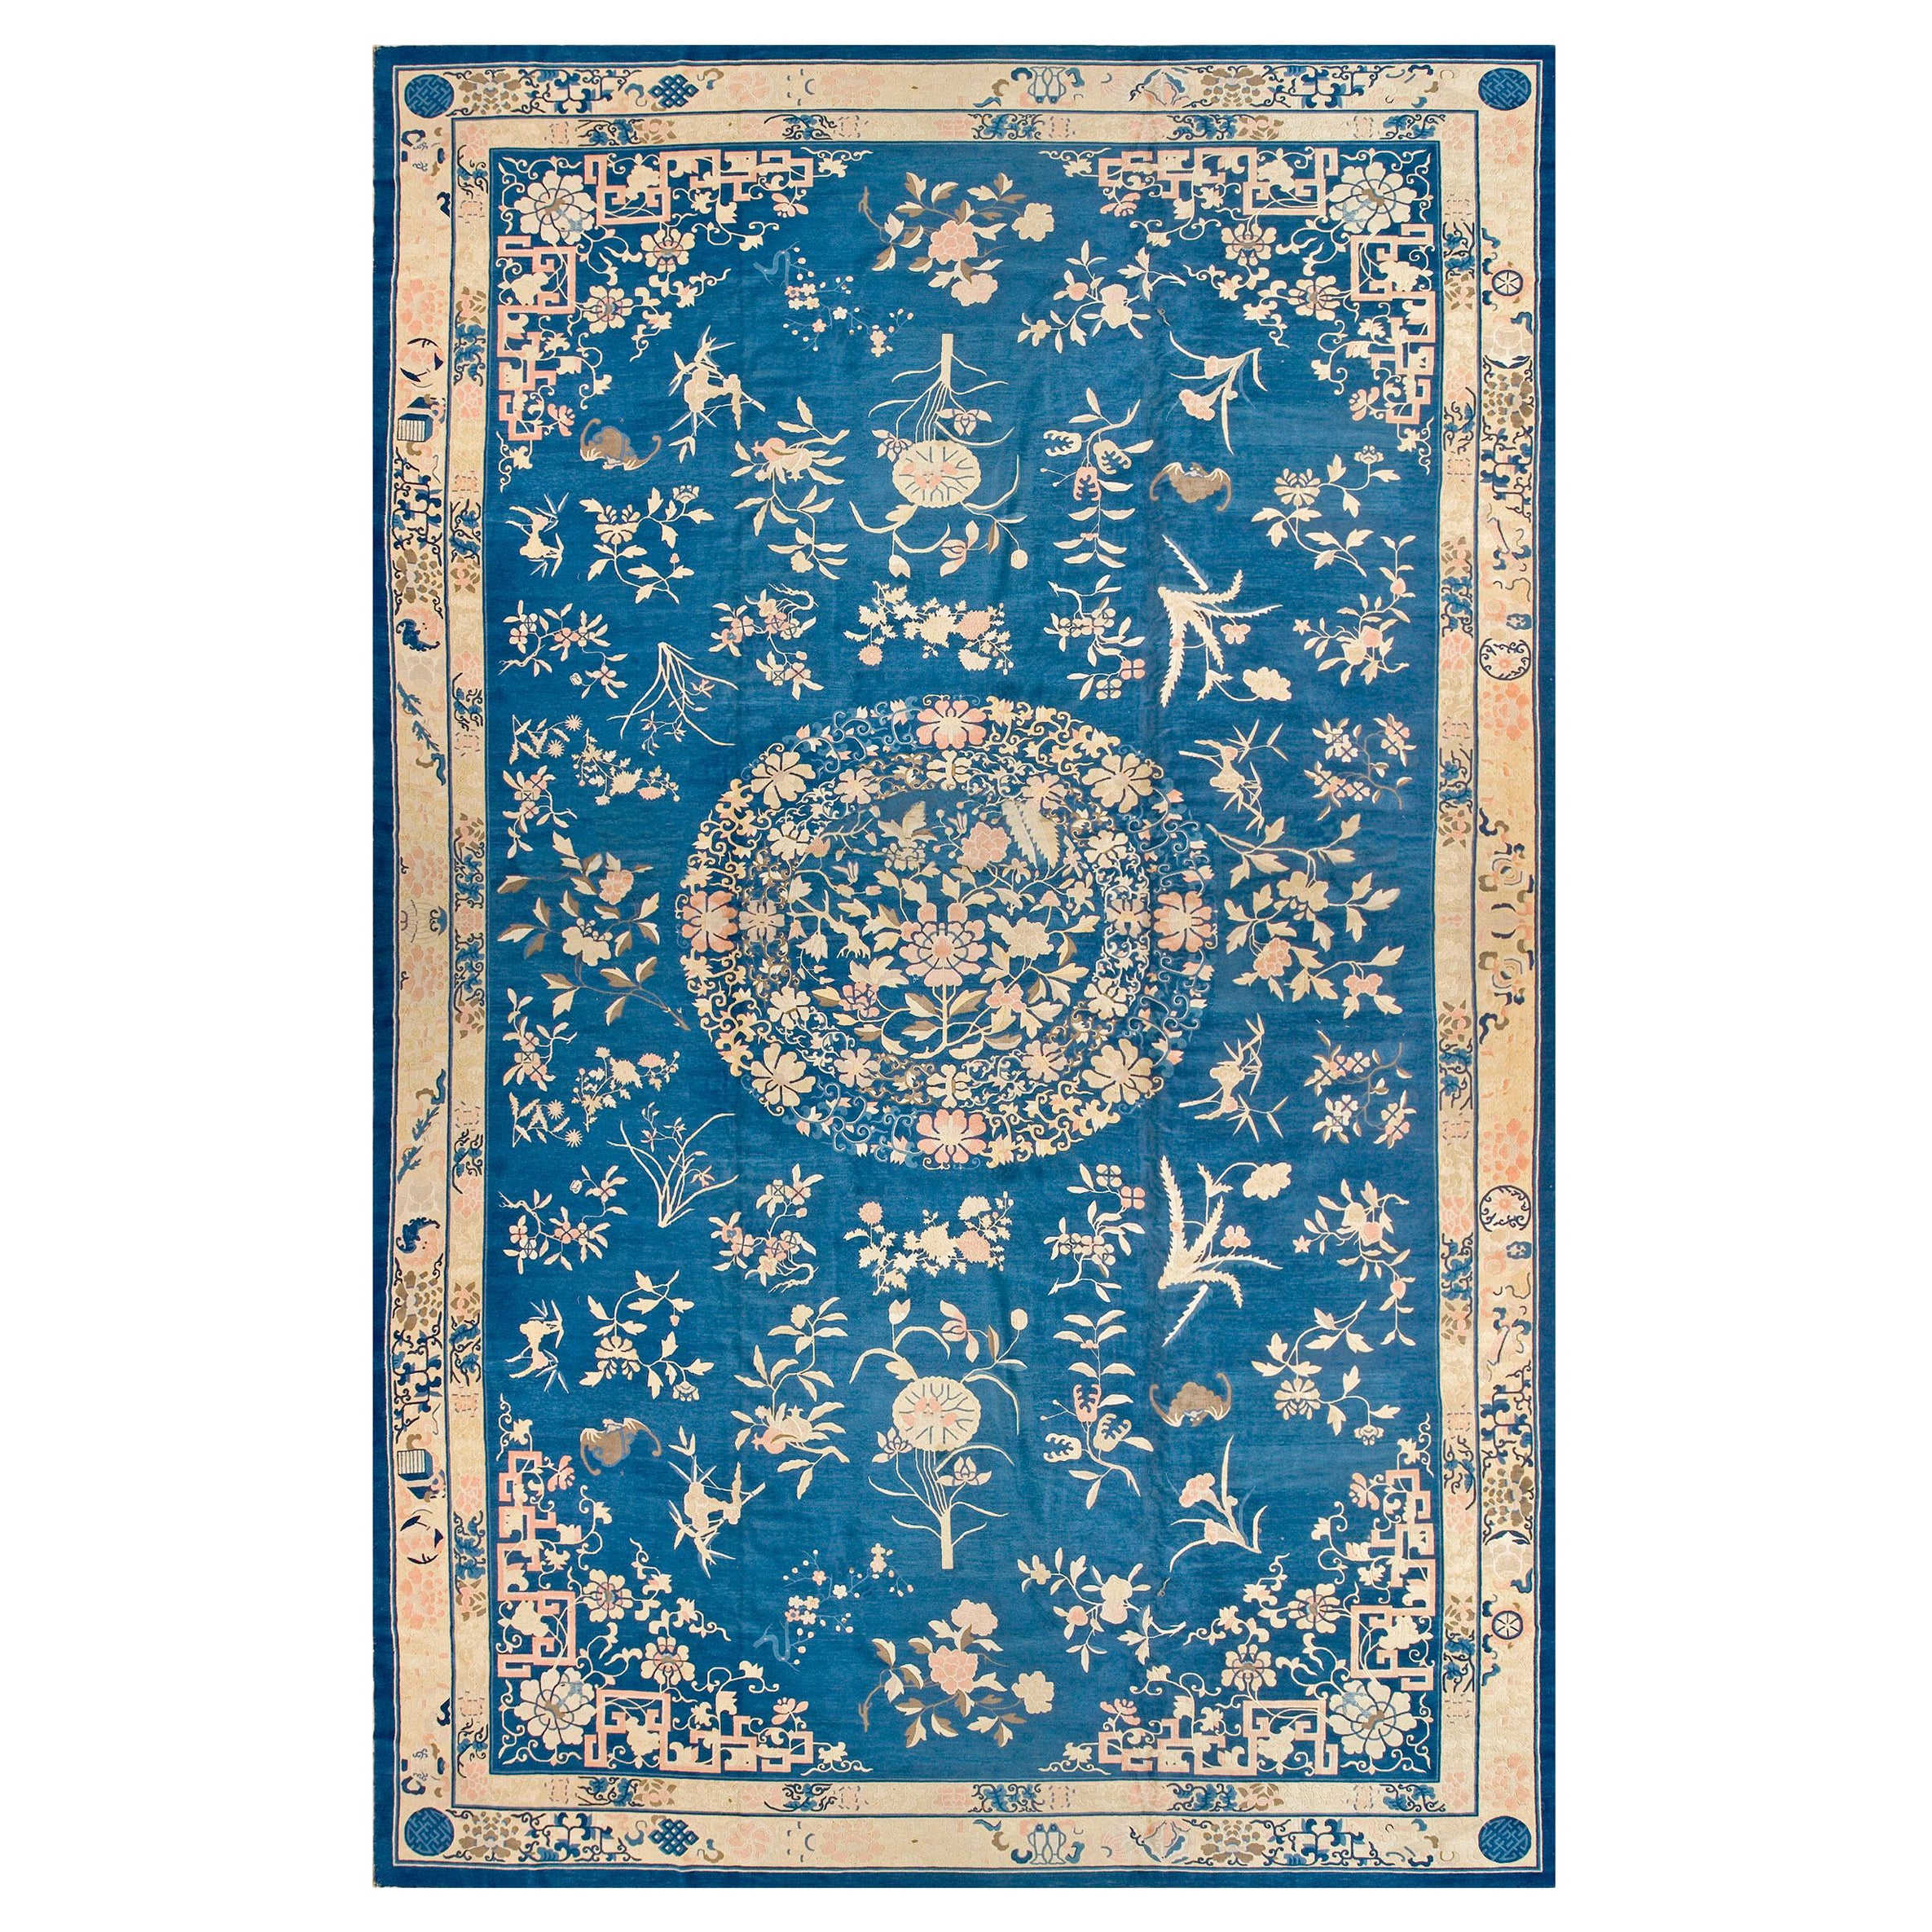 19th Century Chinese Peking Carpet ( 13'8" x 23'2" - 417 x 706 ) For Sale